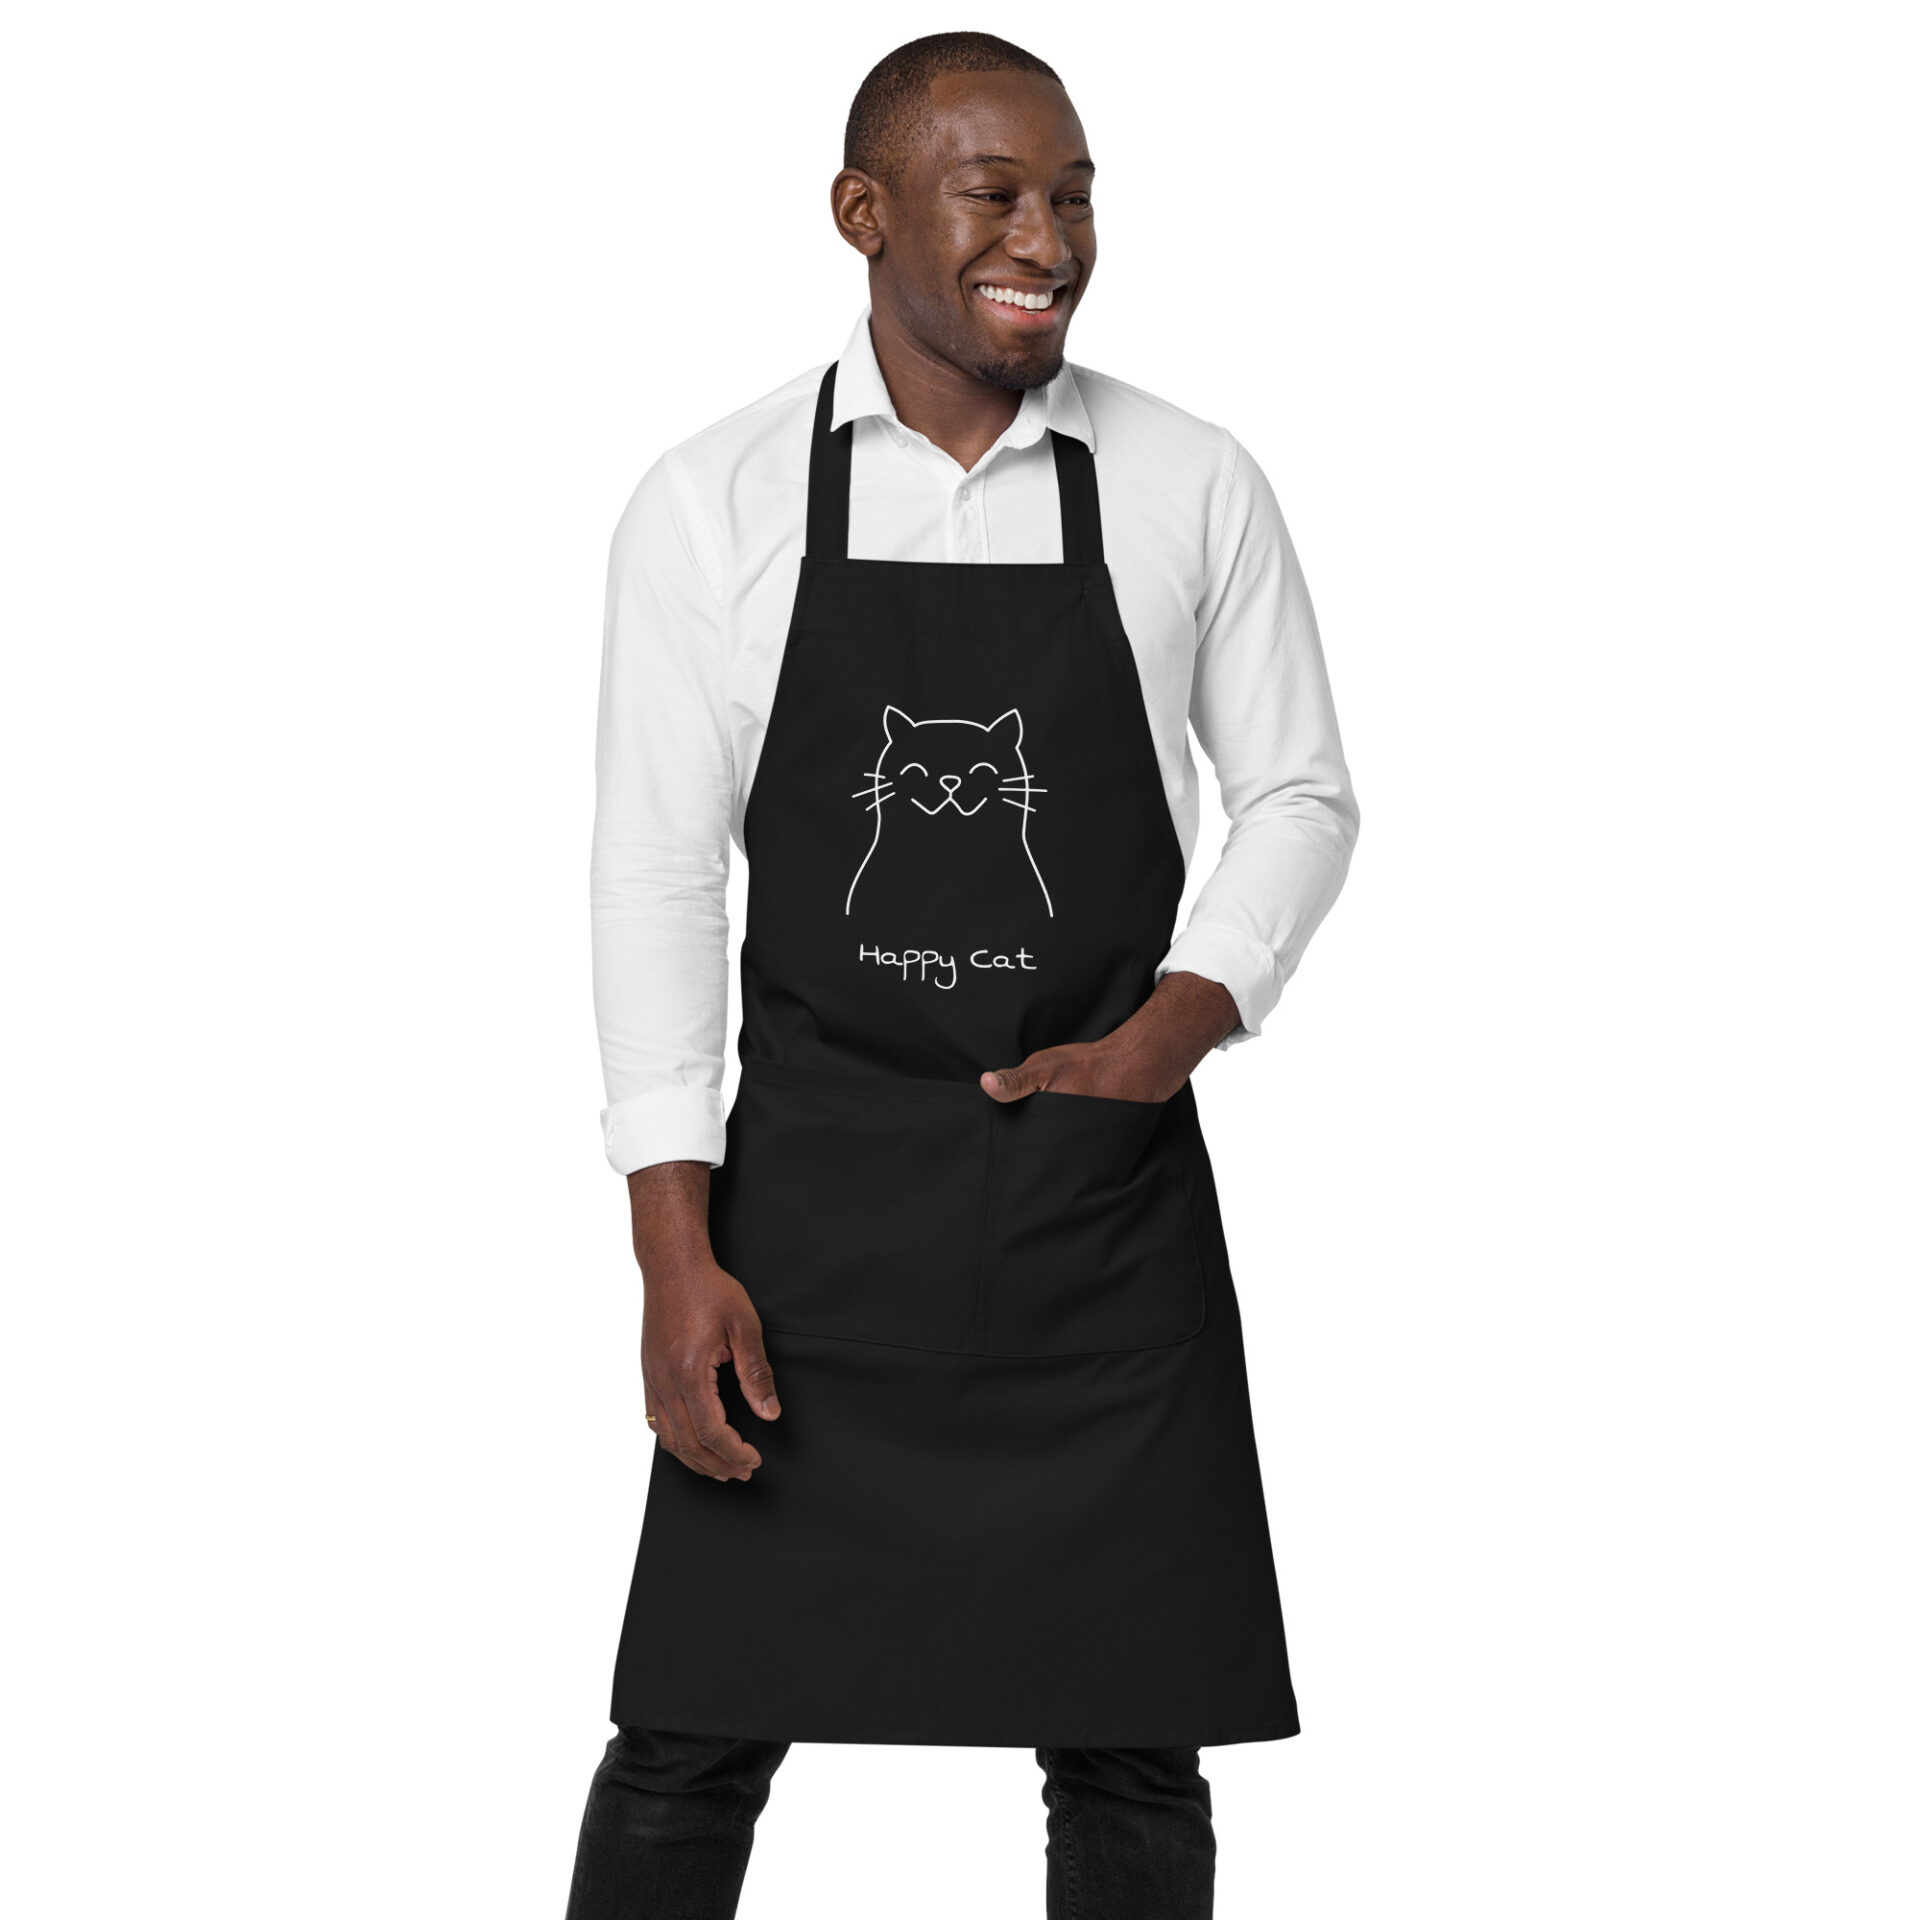 Organic cotton apron, “Happy Cat”